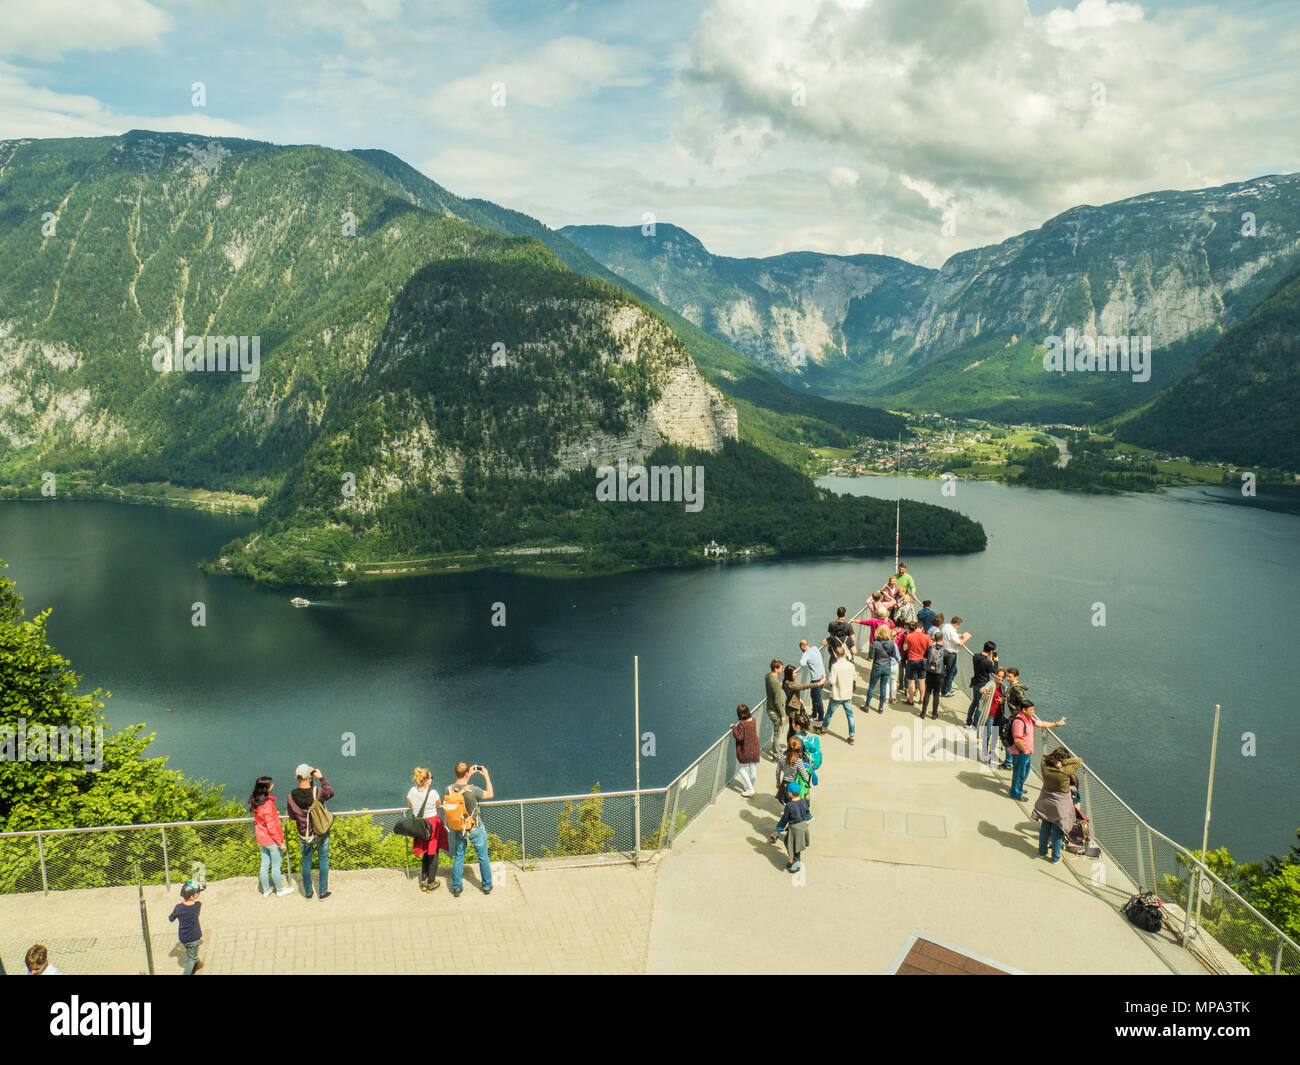 Skywalk viewing platform overlooking lake Hallstatt in Austria's Salzkammergut (Lake District) region Stock Photo